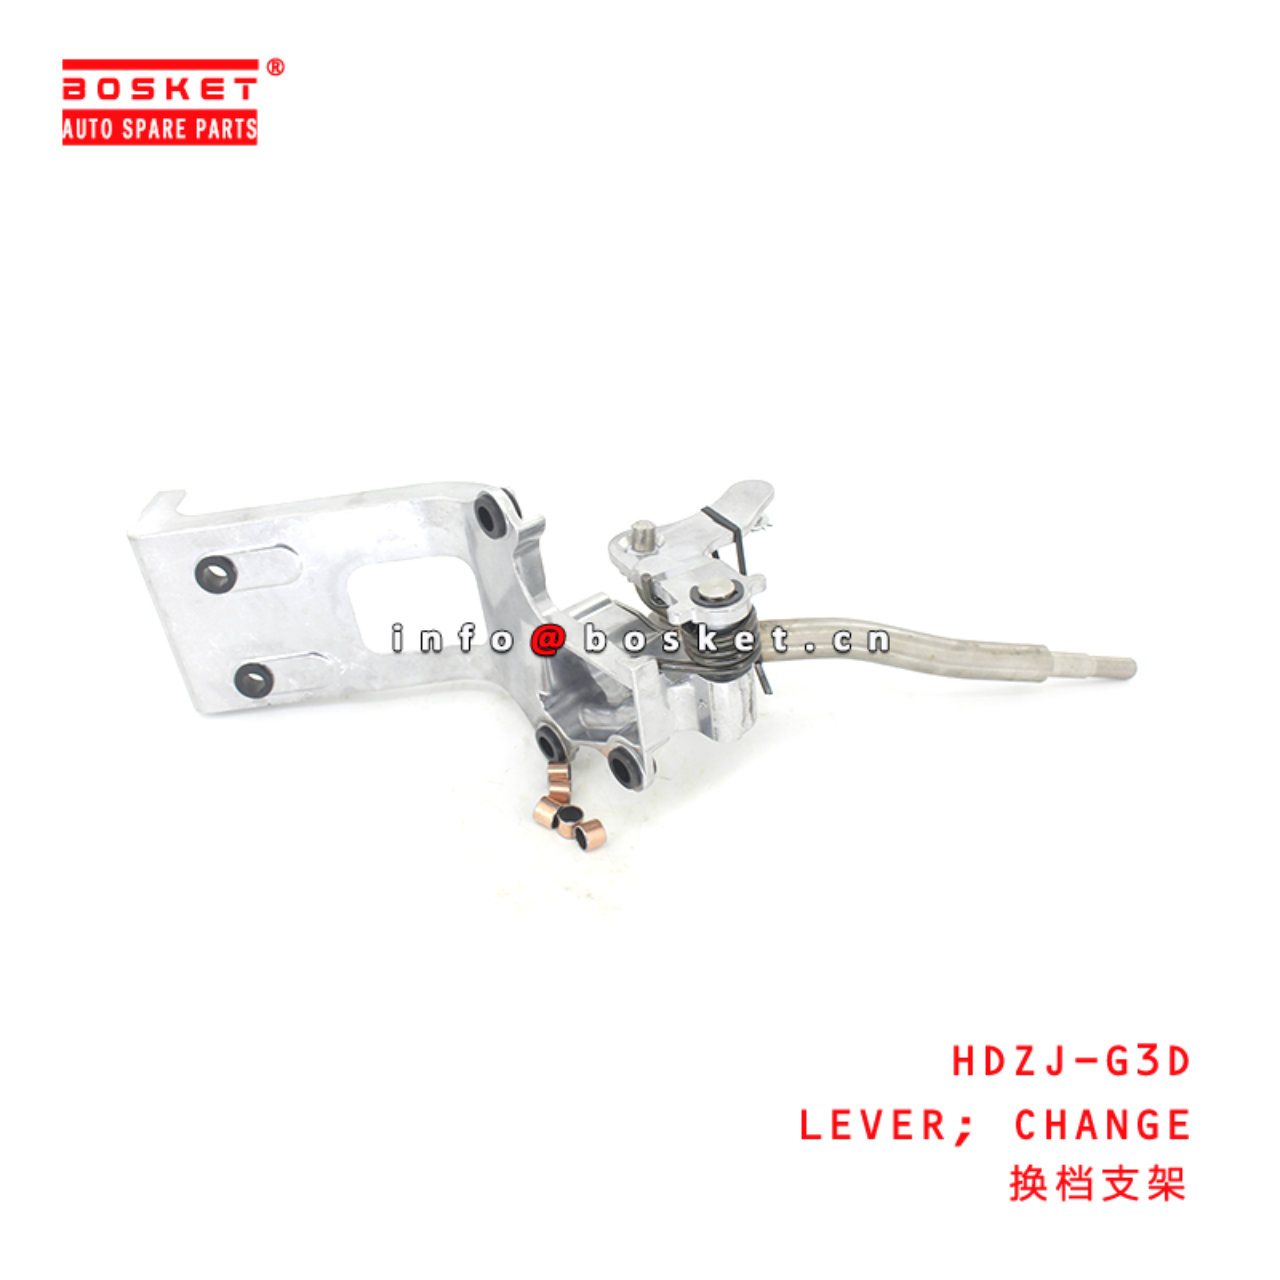 HDZJ-G3D Change Lever Suitable for ISUZU HINO 500